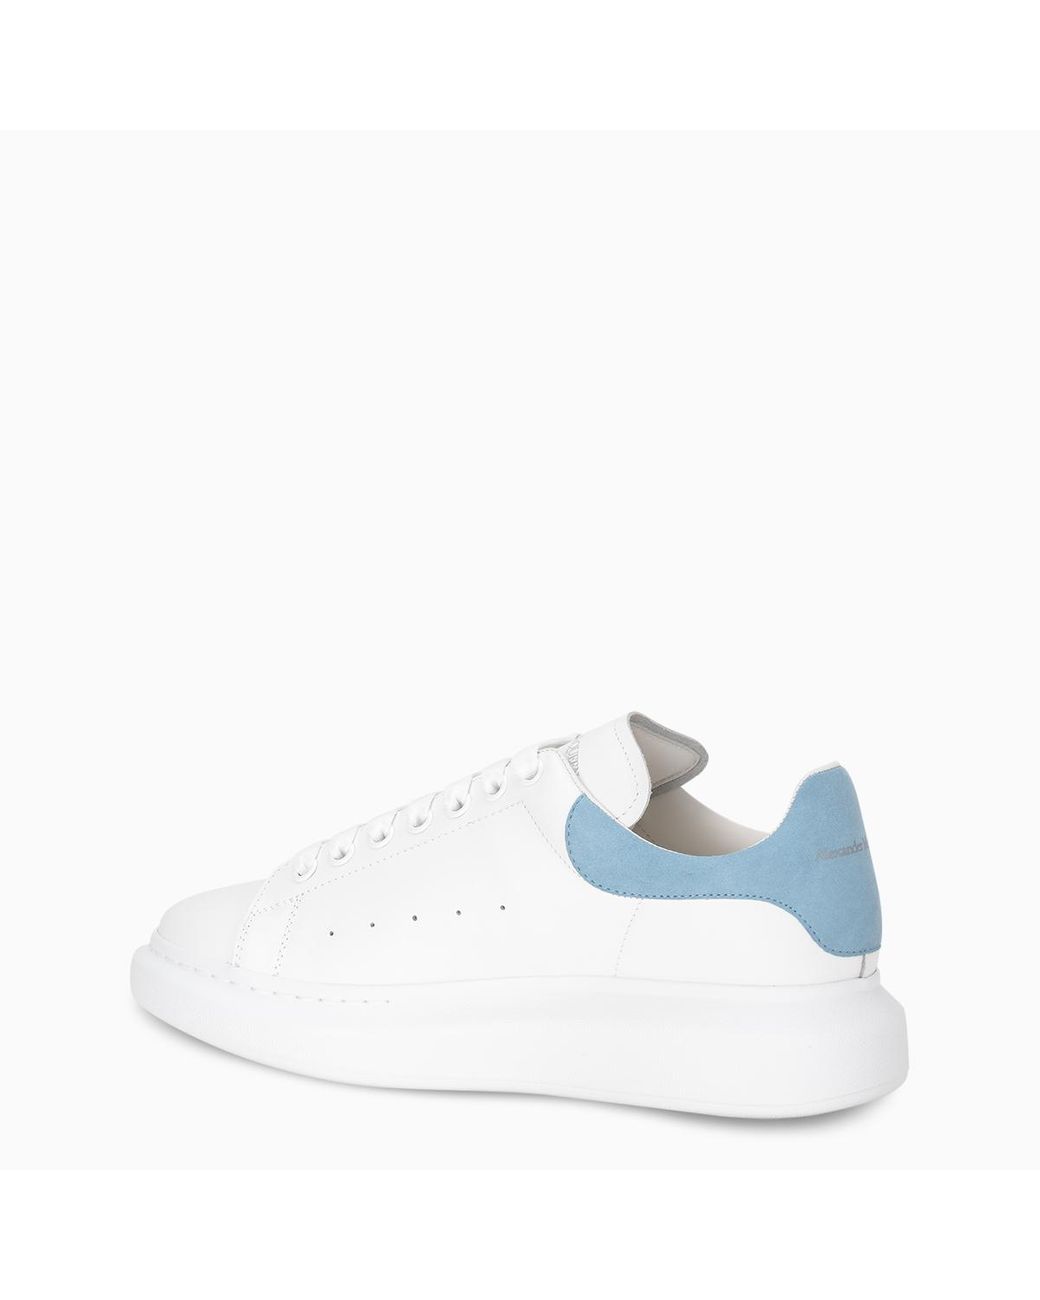 Alexander Mcqueen Sneakers Blue | vlr.eng.br